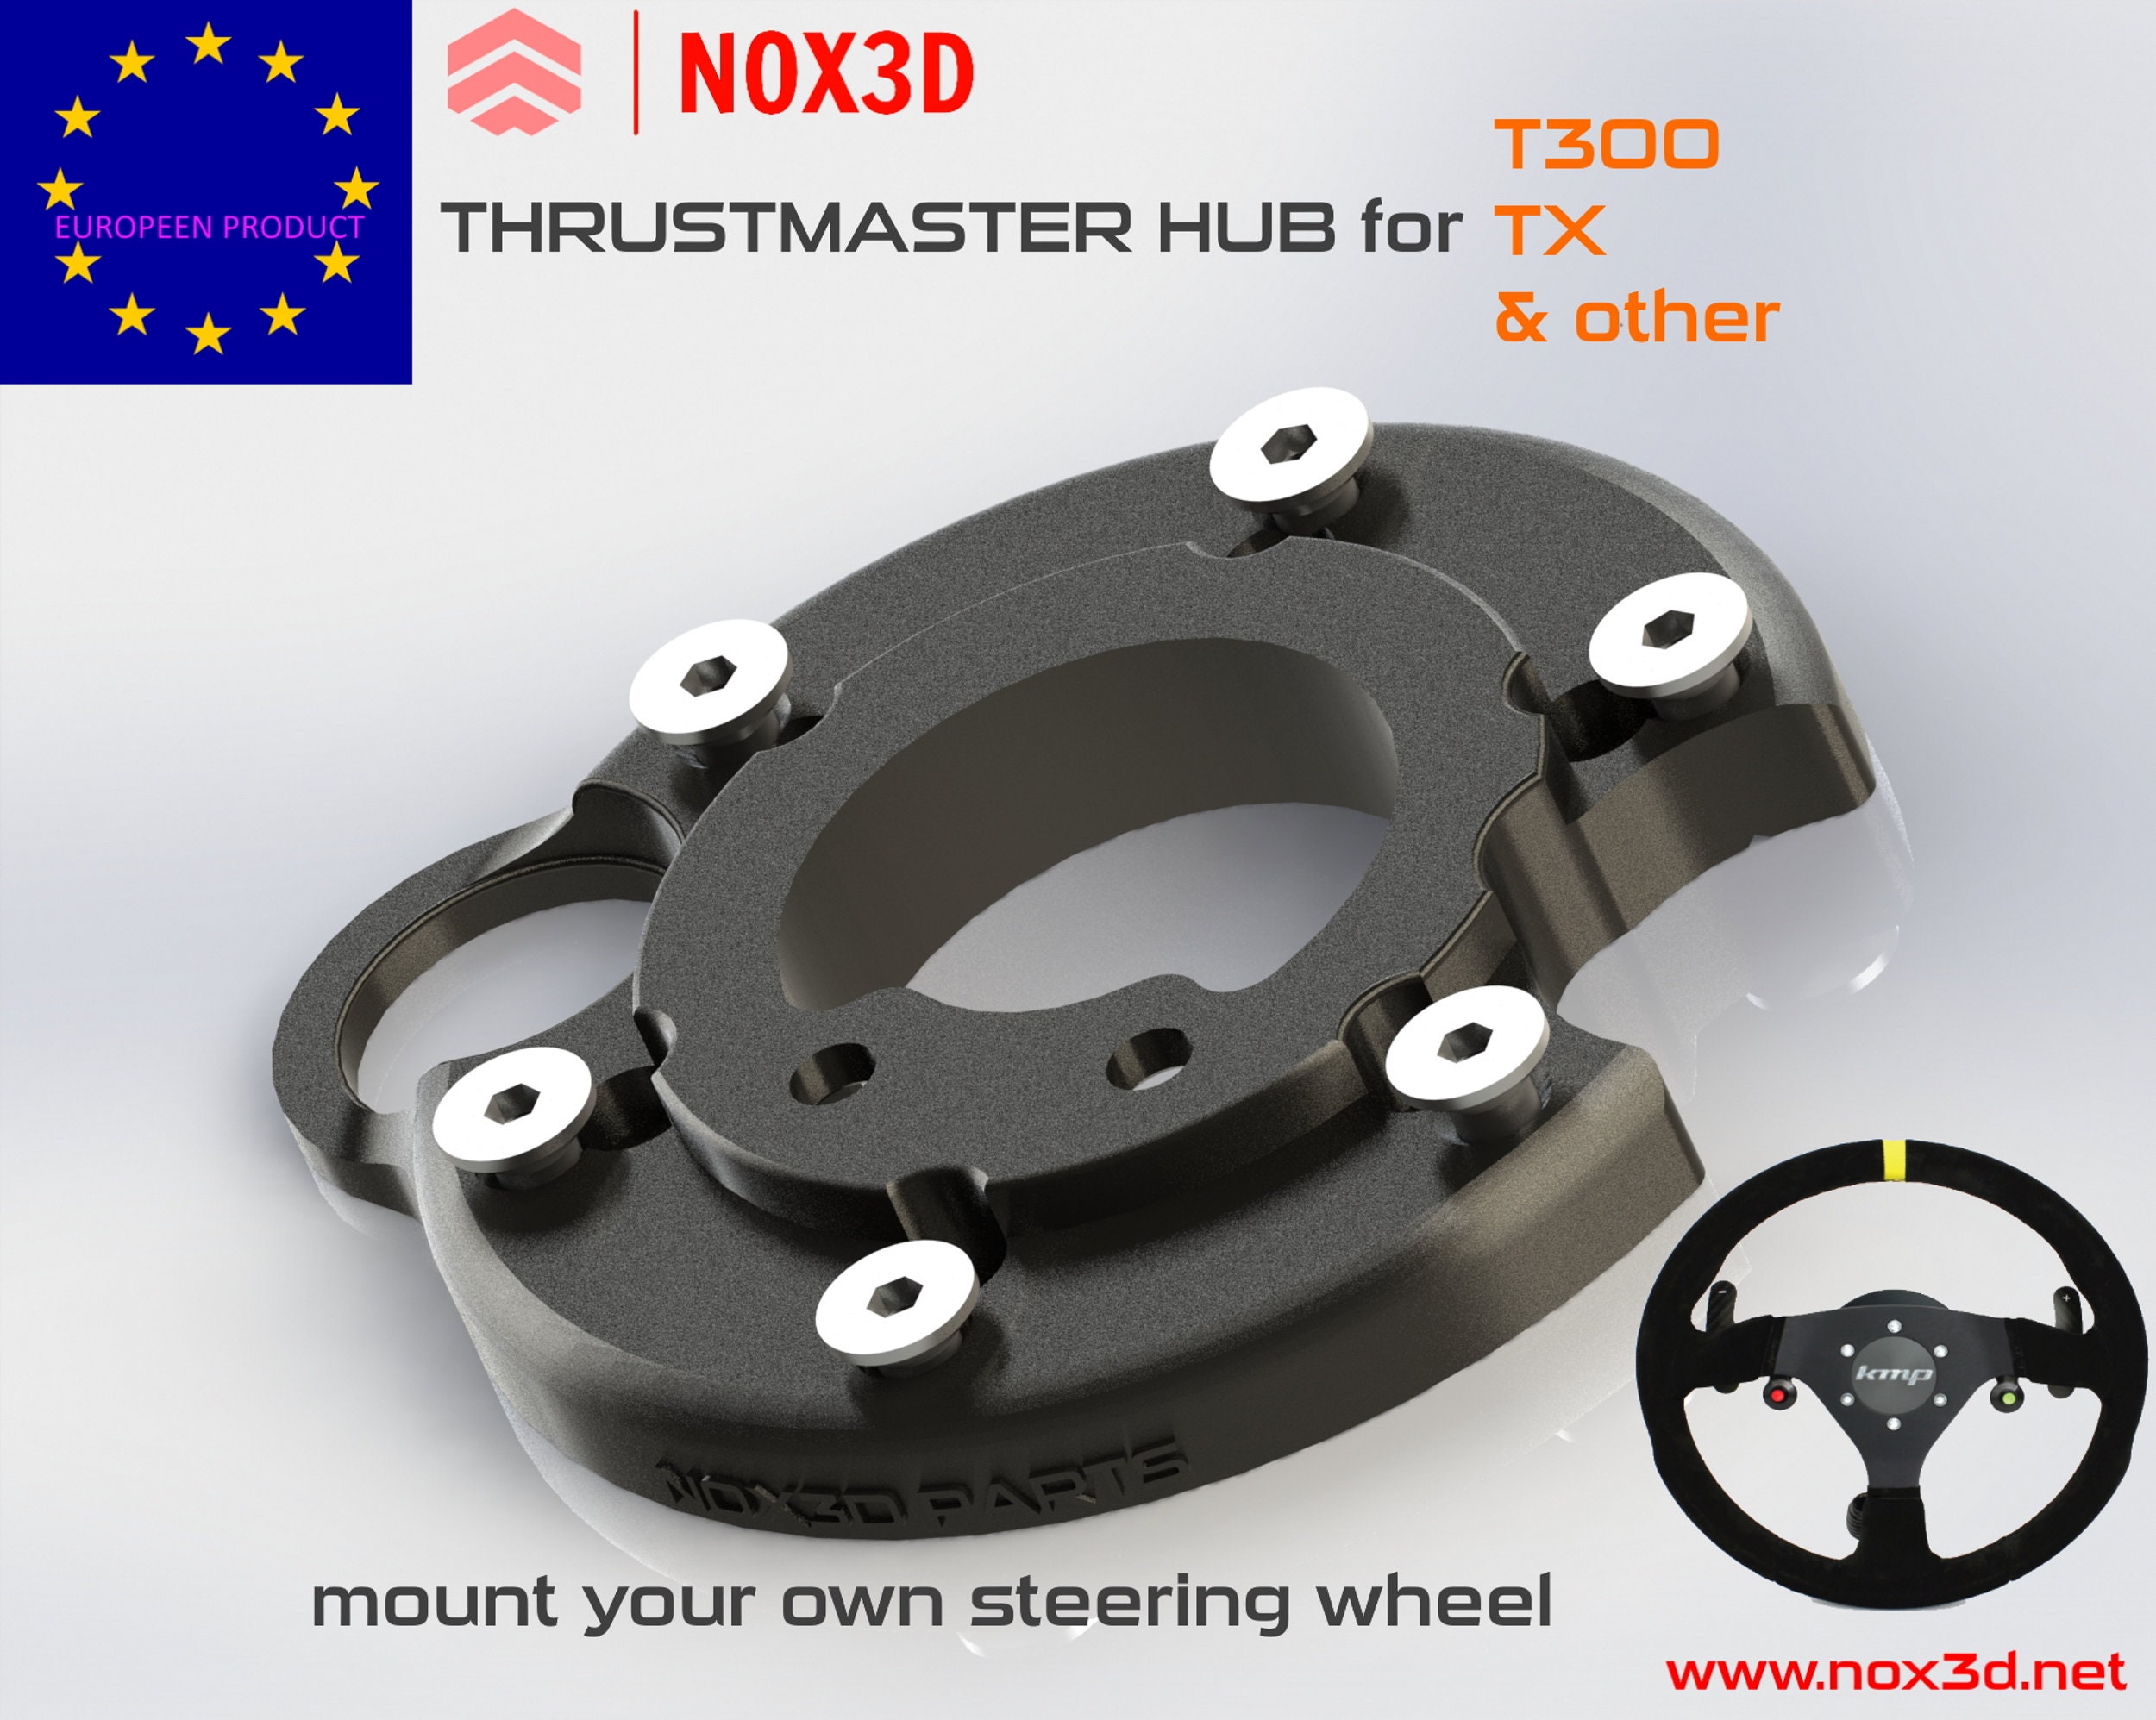 PRESALE KIT Steering wheel adapter for Thrustmaster T150/T150RS/TMX/TMX PRO